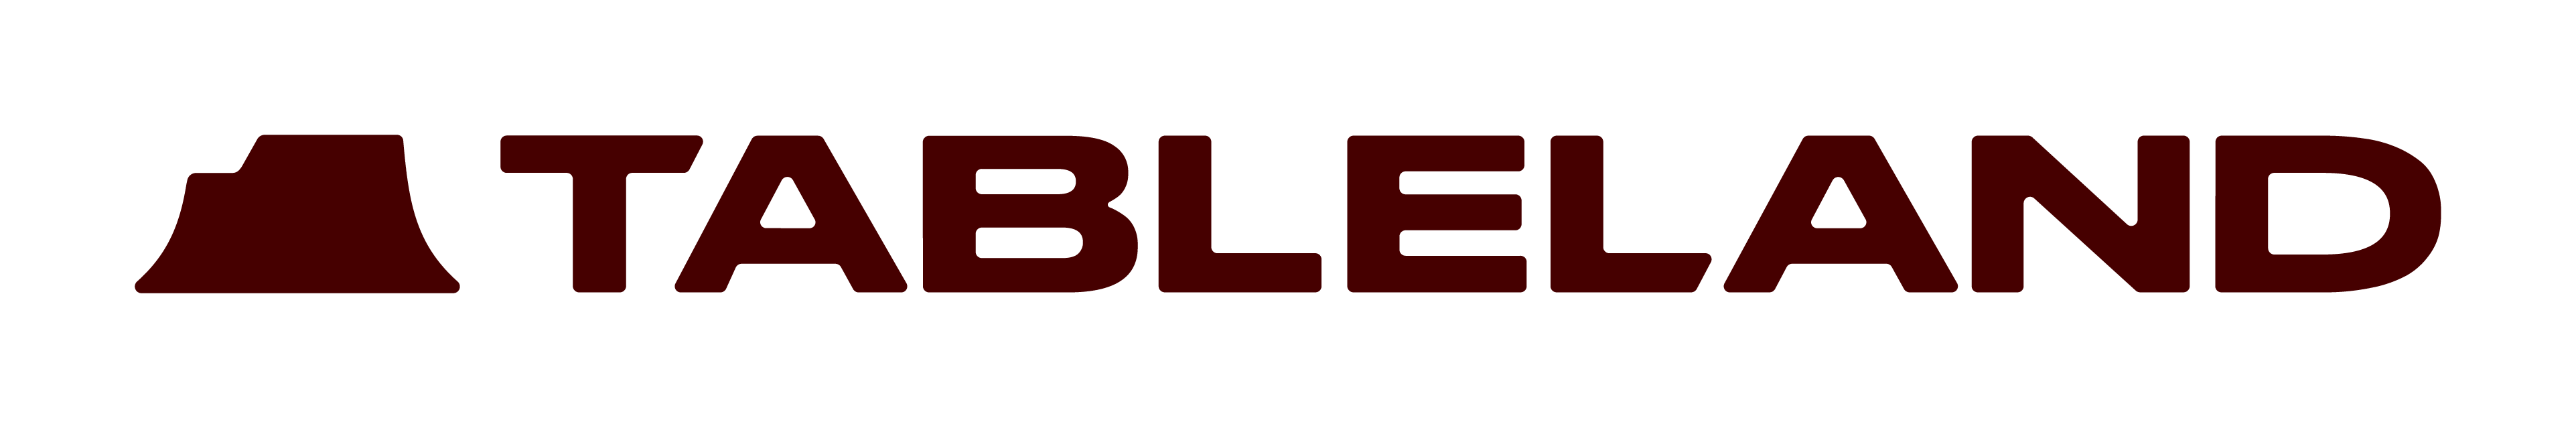 Tableland Logo